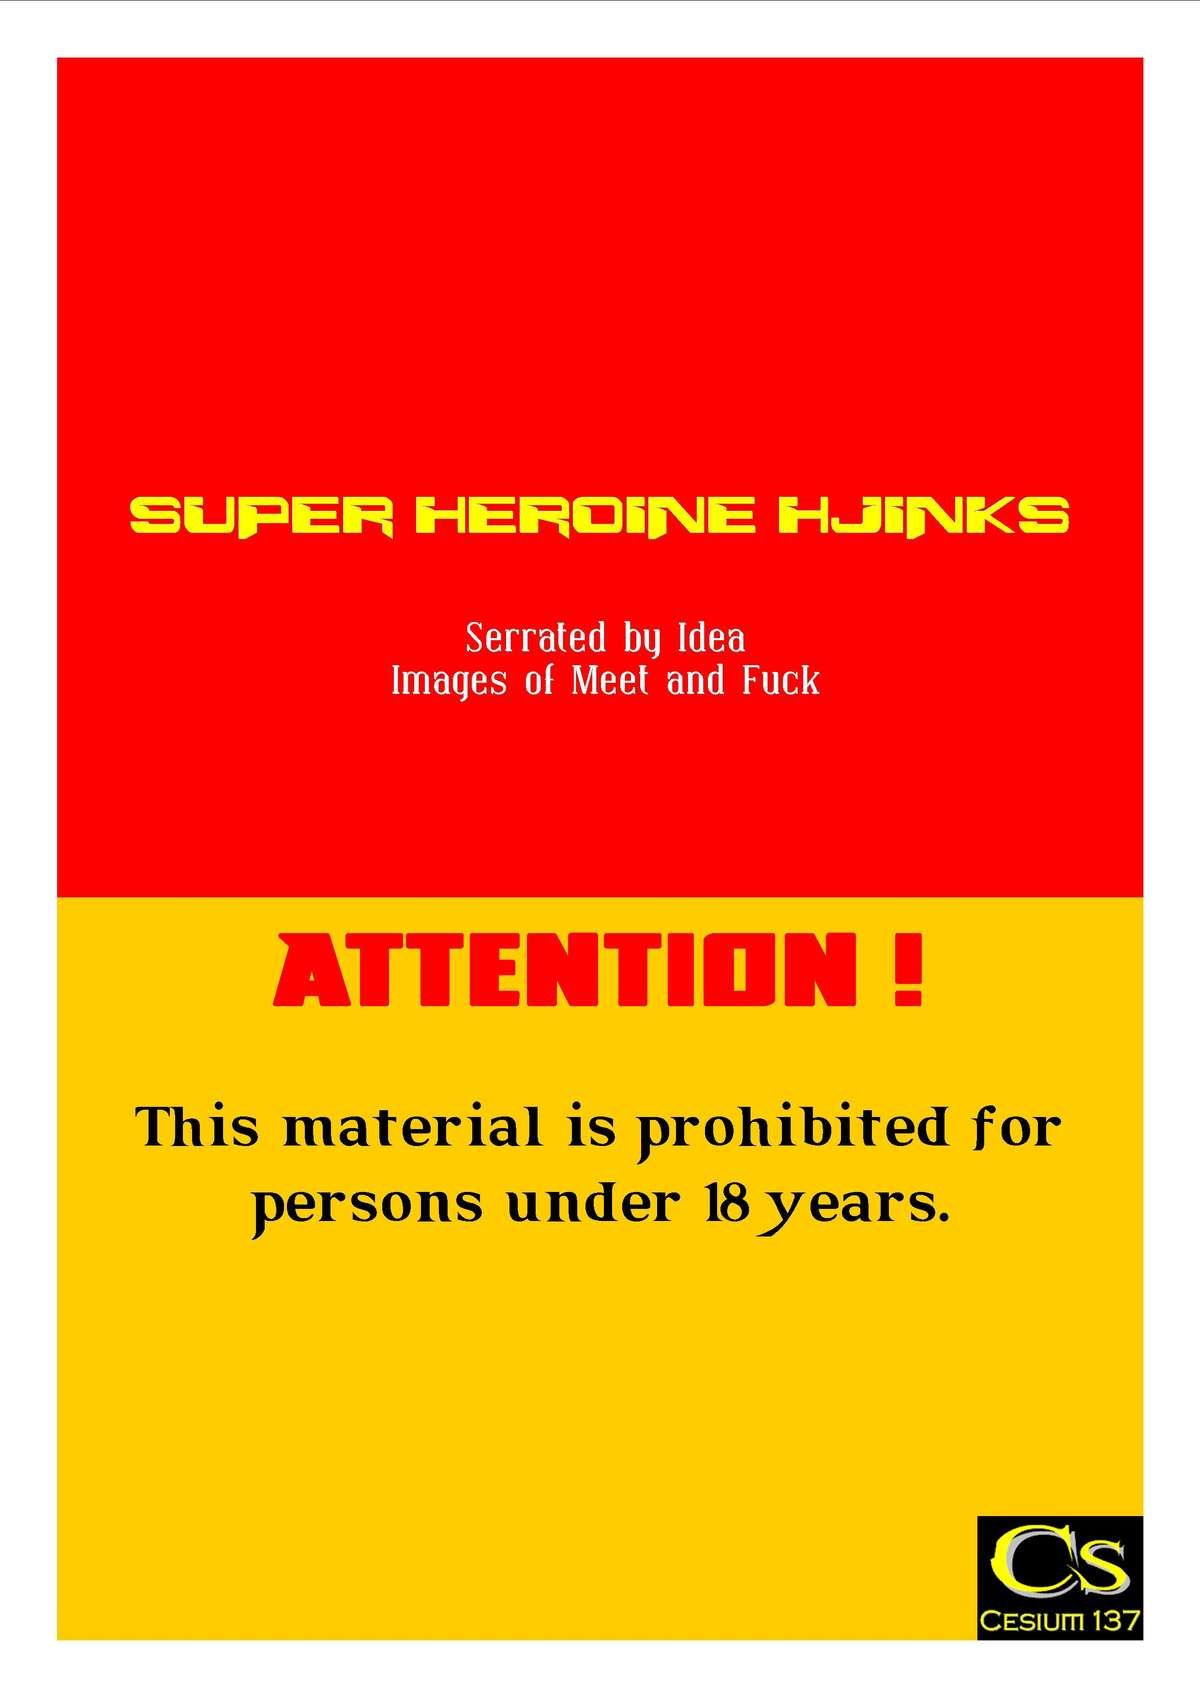 Super Heroine Hijinks page 2